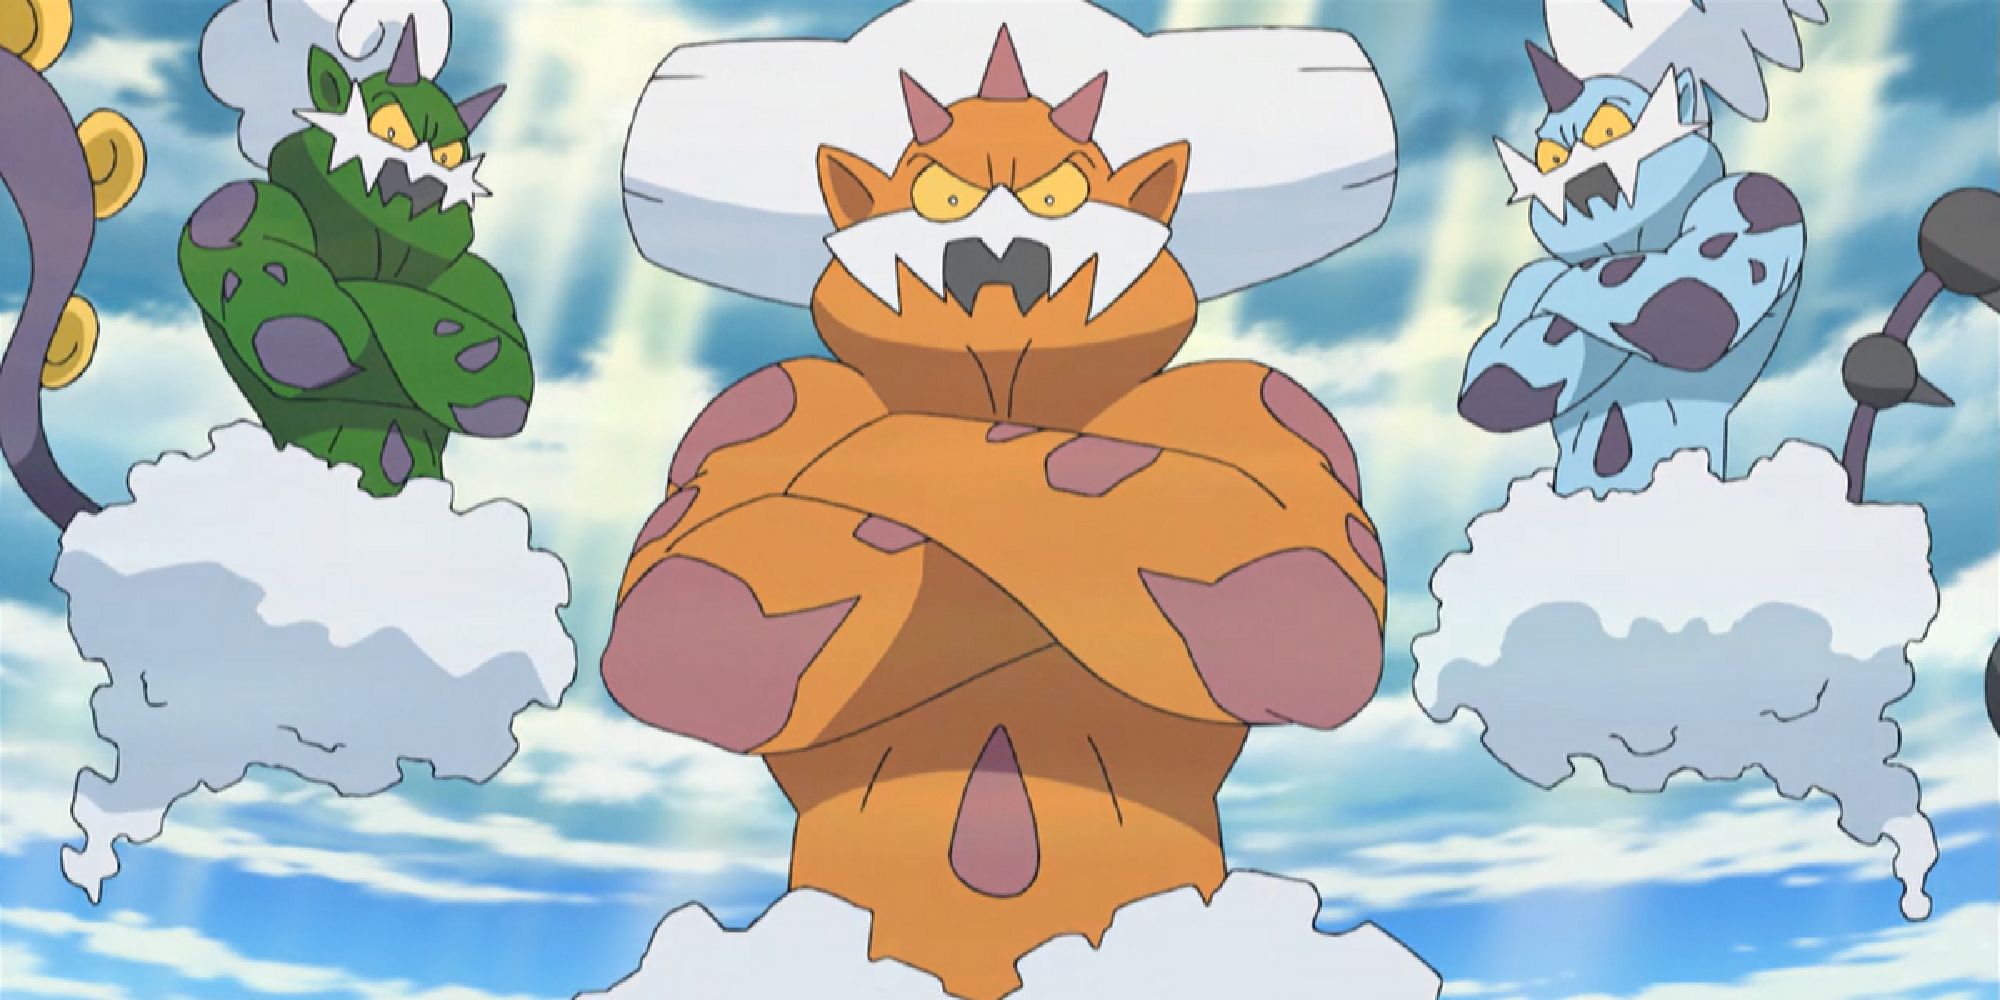 The Forces of Nature trio (Tornadus, Thundurus, Landorus) from the Pokemon anime